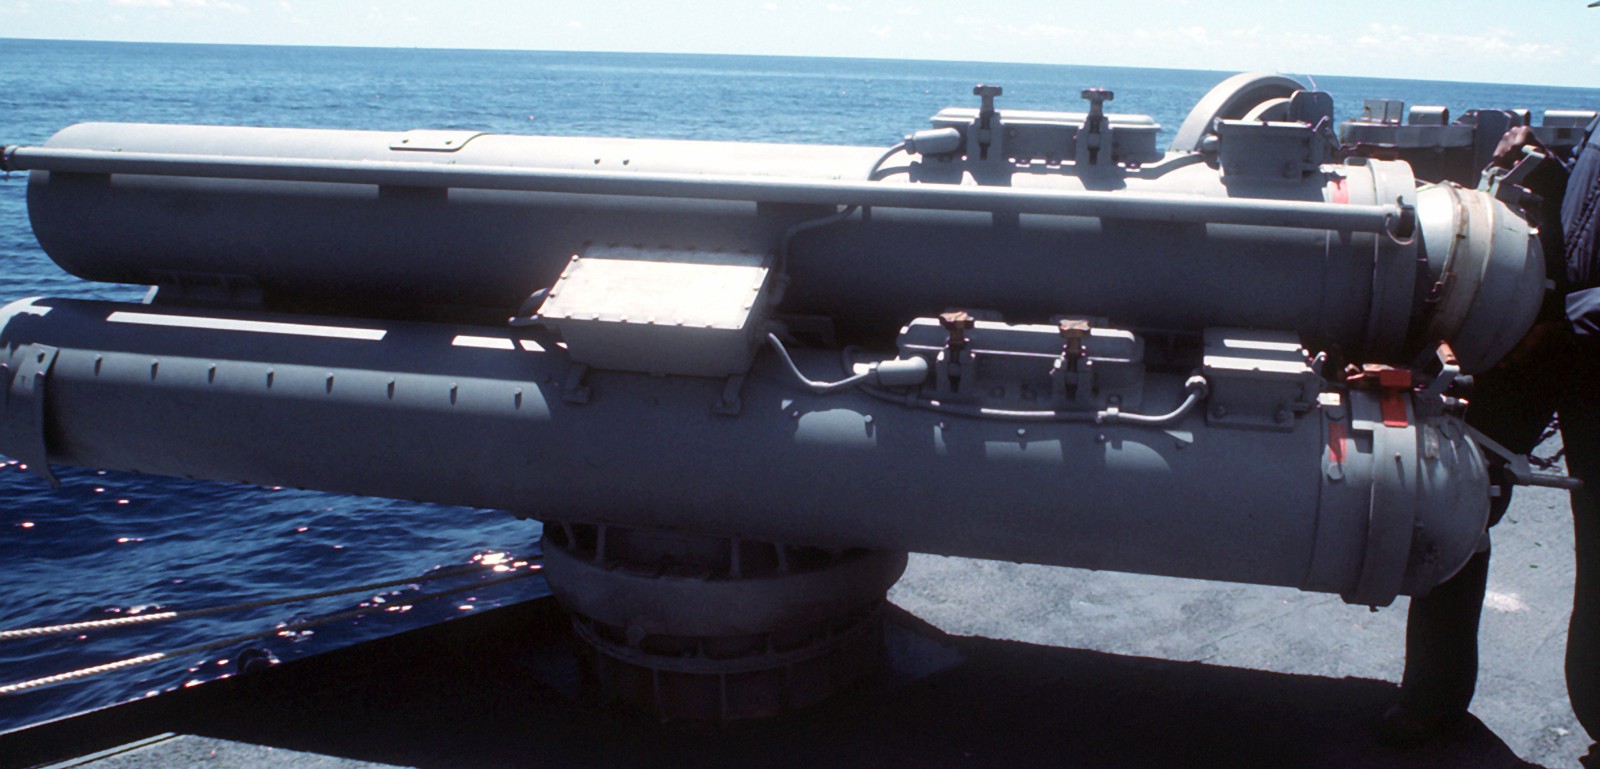 mk-32 torpedo tubes svtt 59 oliver hazard perry class frigate ffg